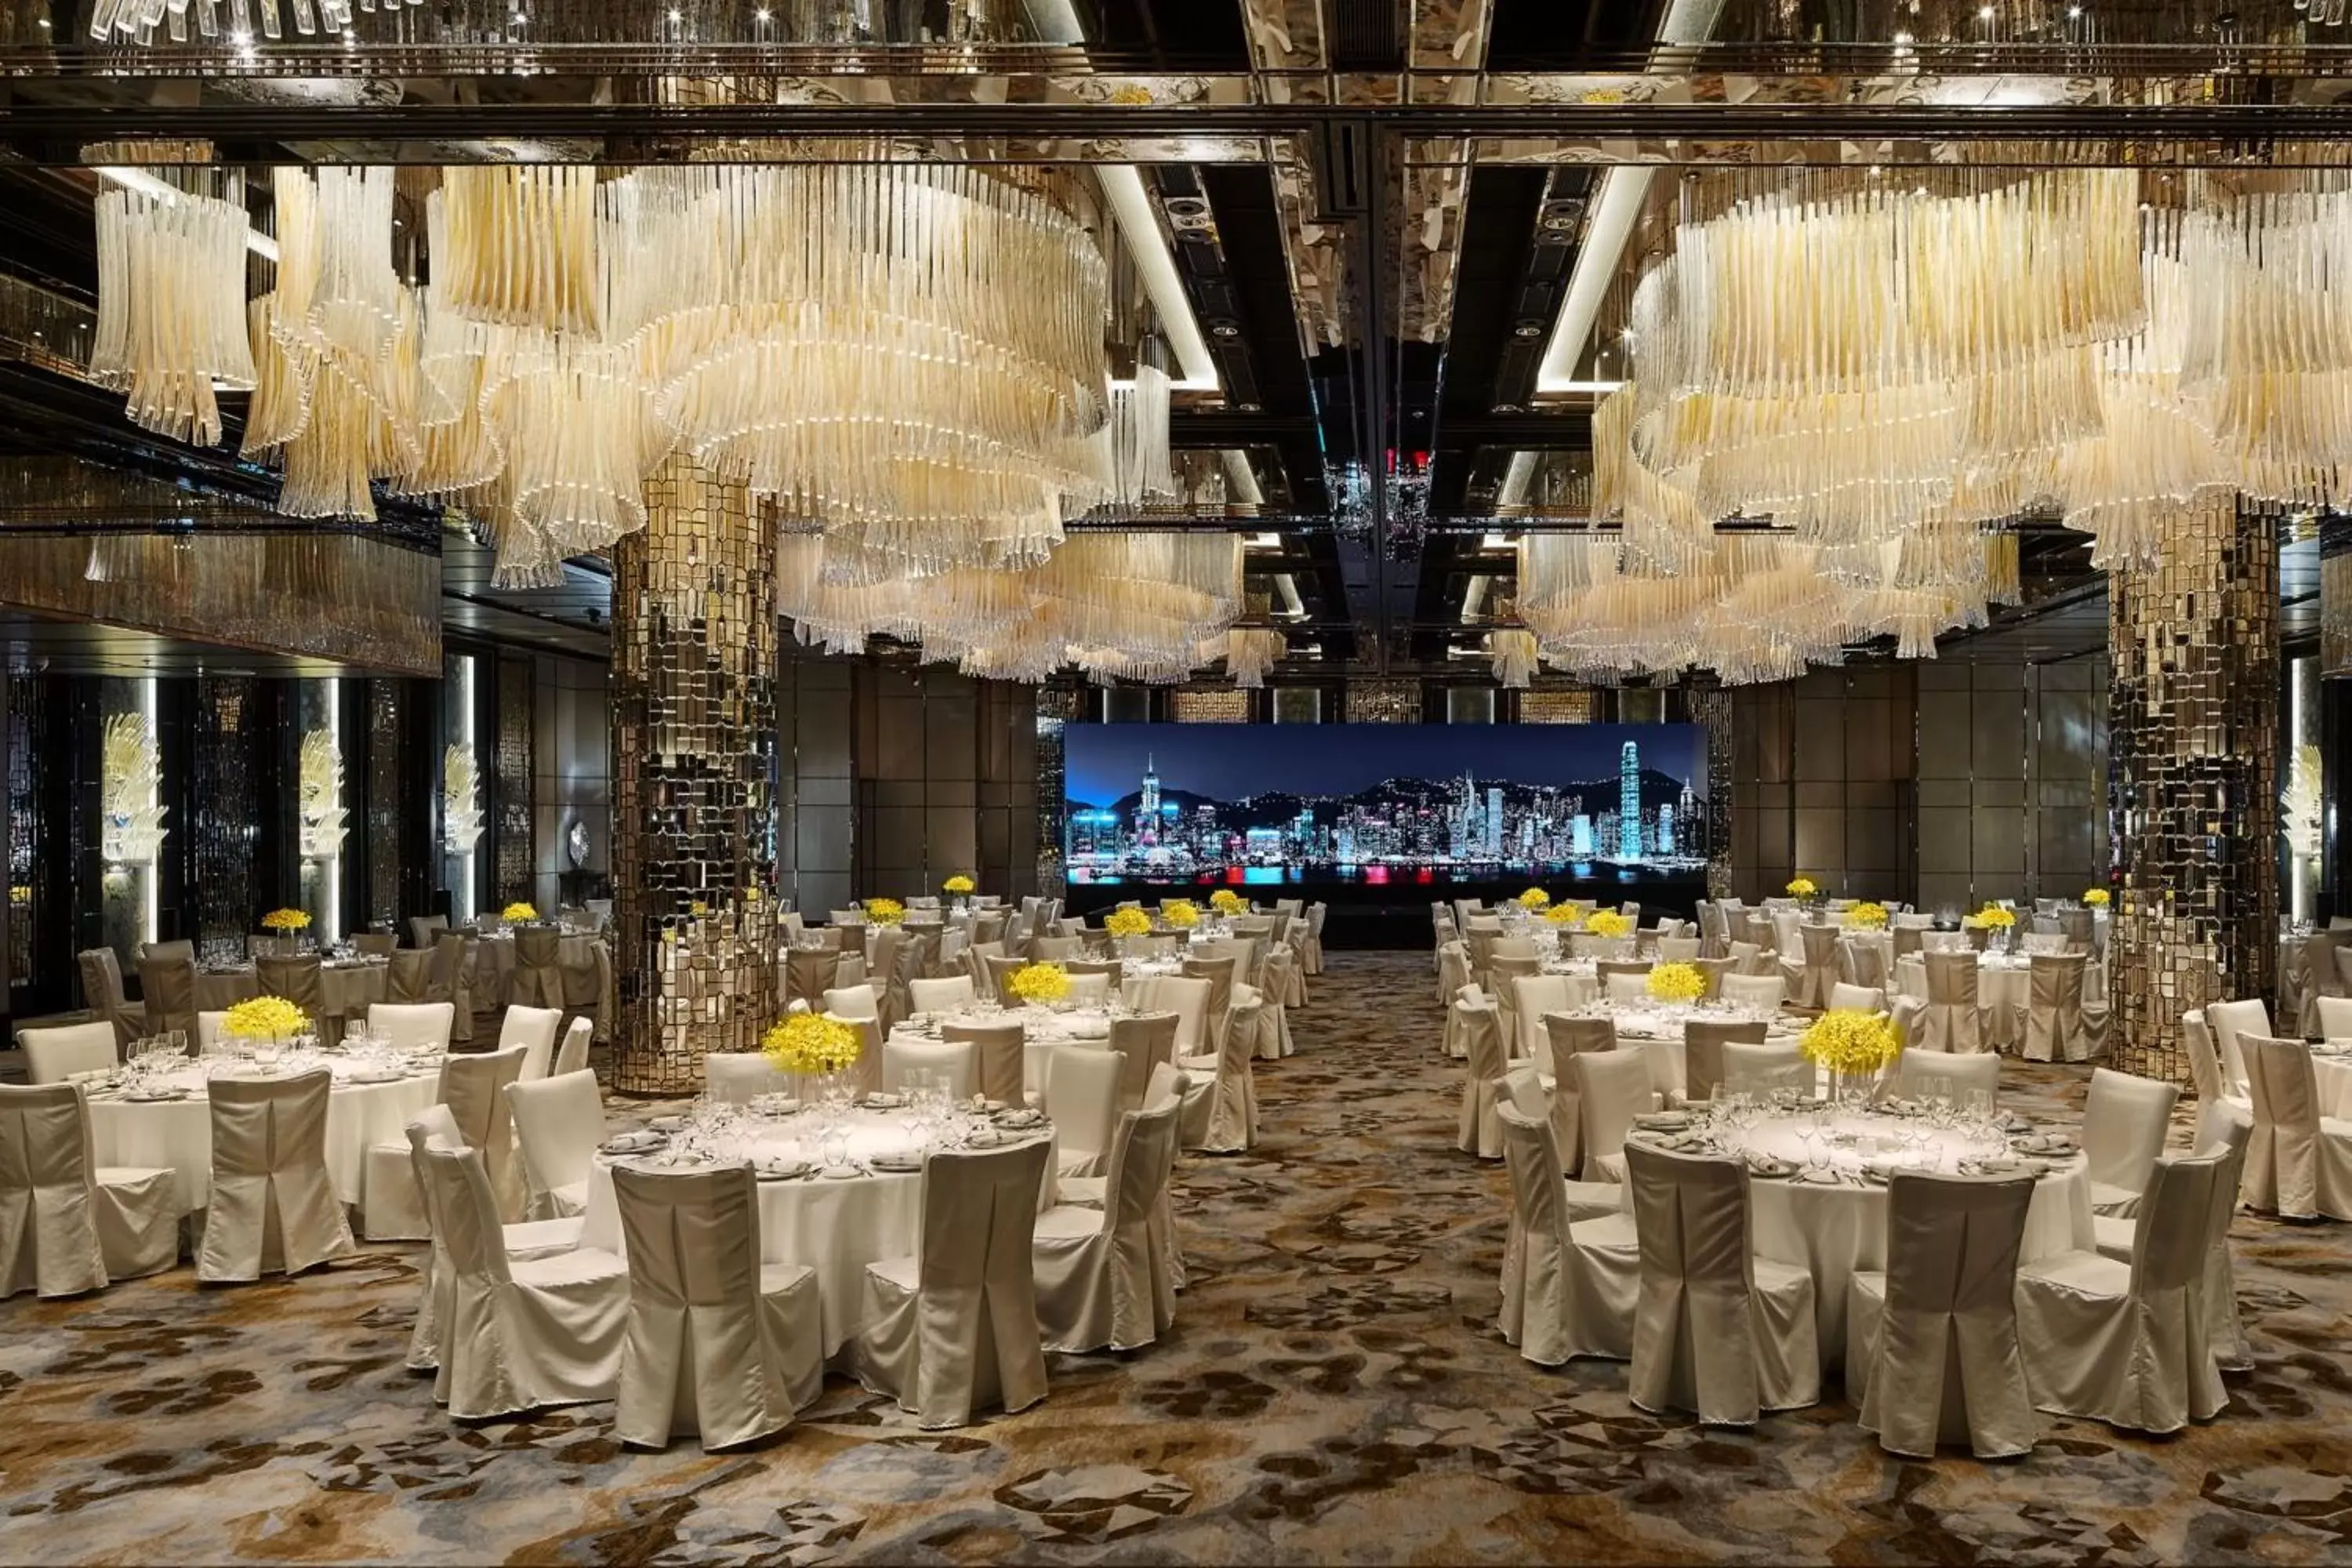 Banquet/Function facilities, Banquet Facilities in The Ritz-Carlton Hong Kong